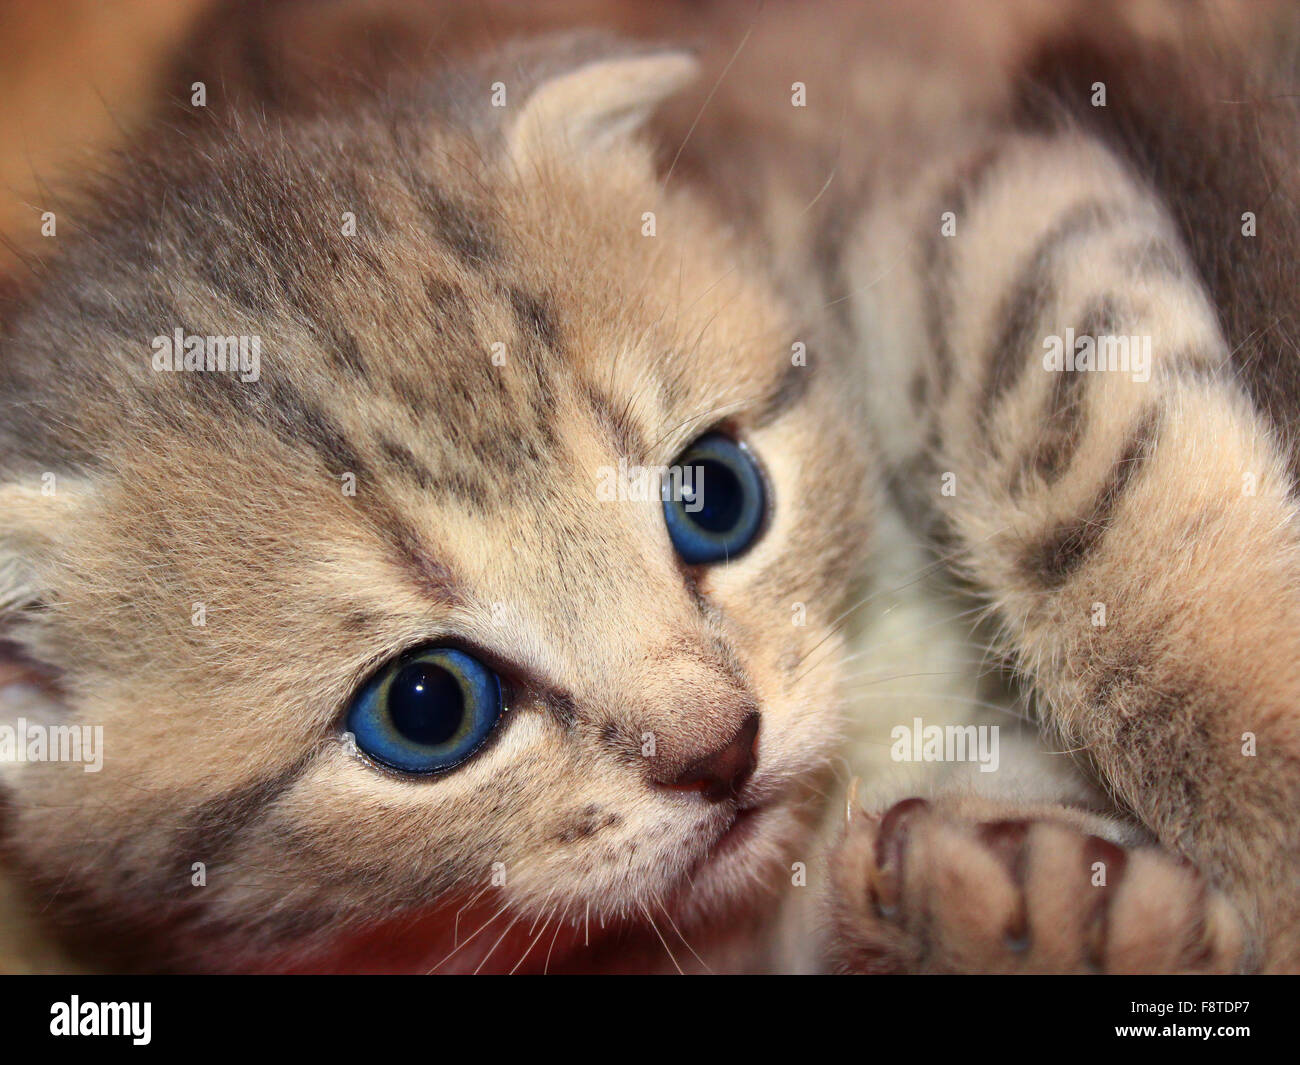 little nice and amusing kitty of Scottish Straight breed Stock Photo